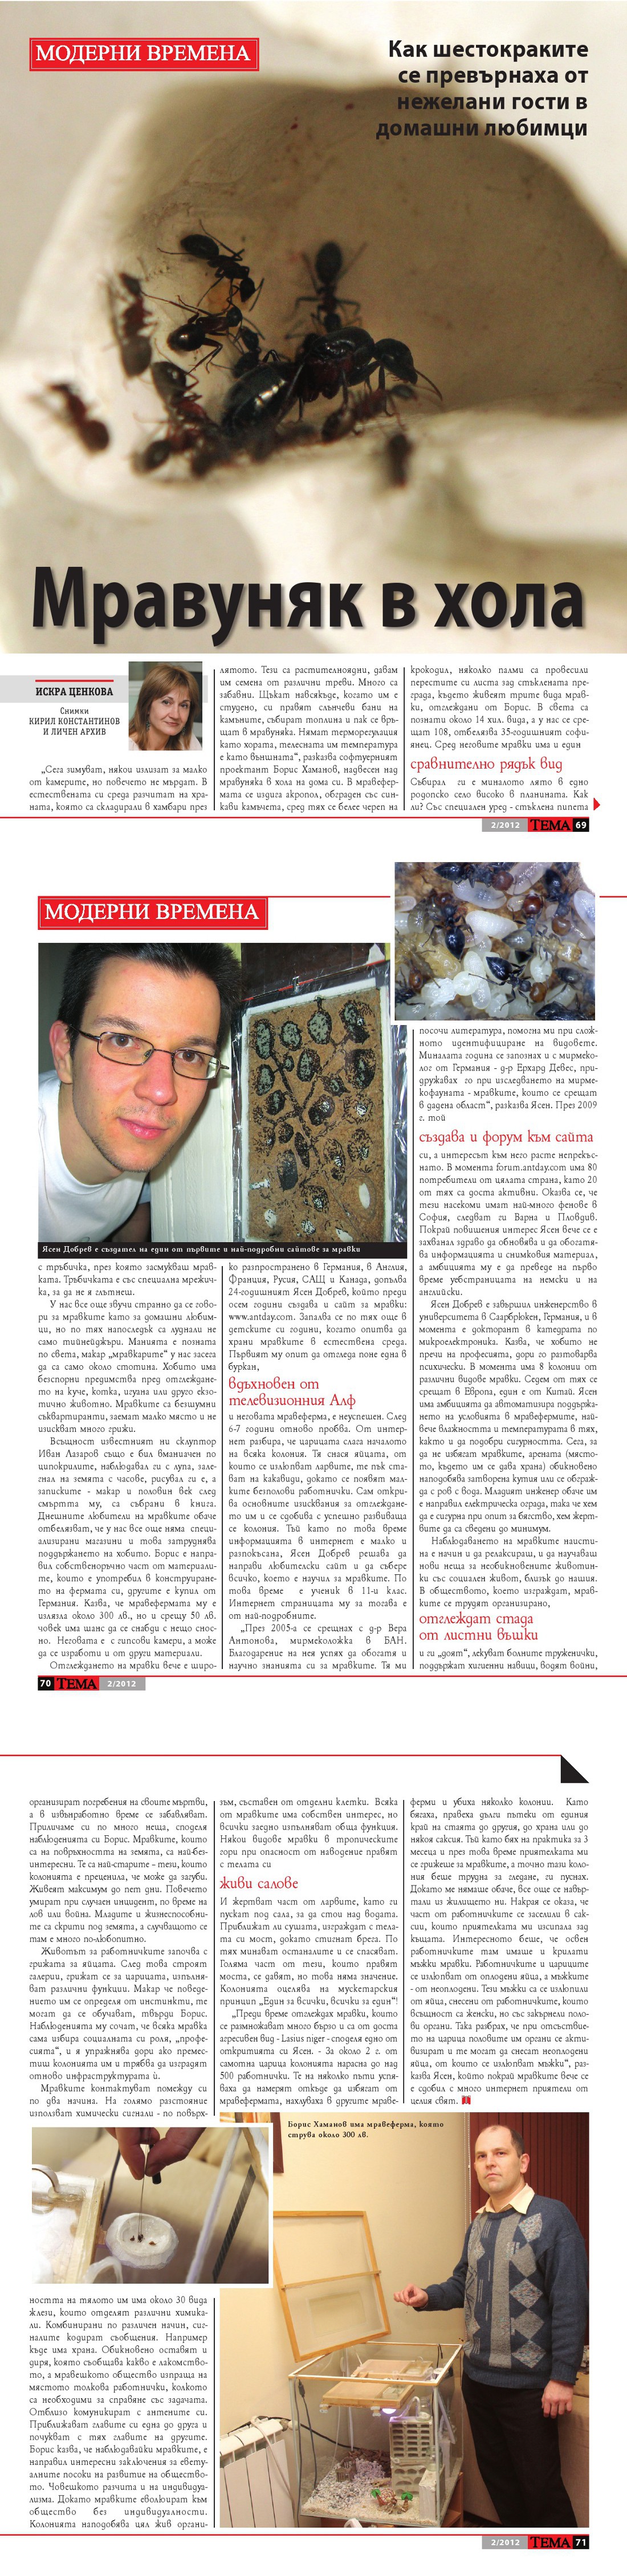 Article in the magazine TEMA by Iskra Tsenkova, 14/01/2012